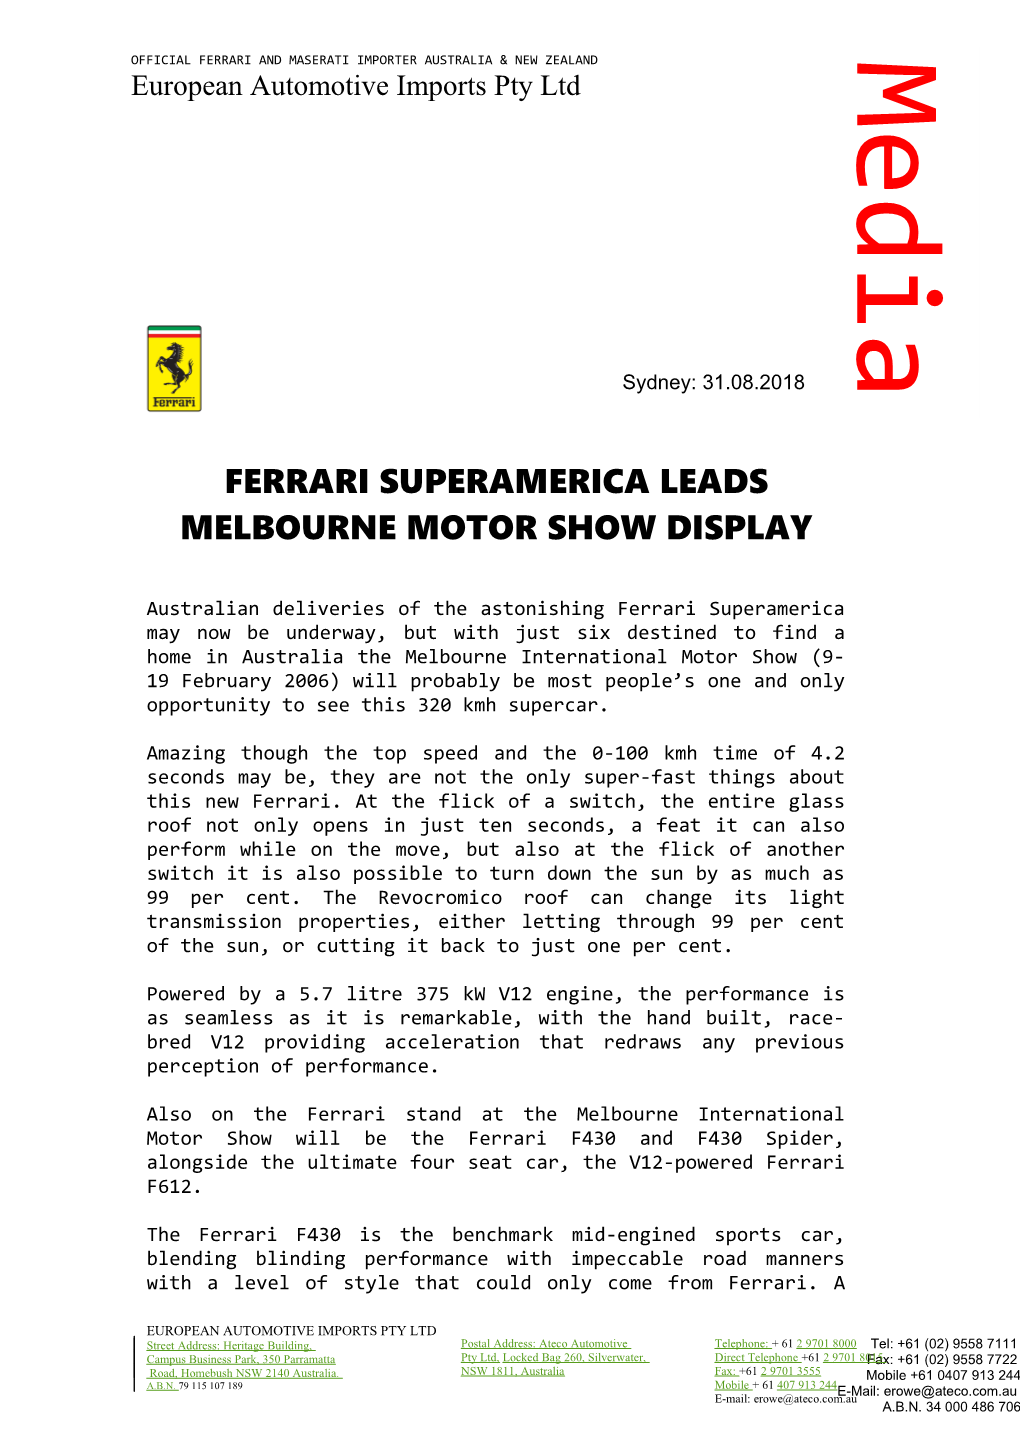 Ferrari Superamericaleads Melbourne Motor Show Display